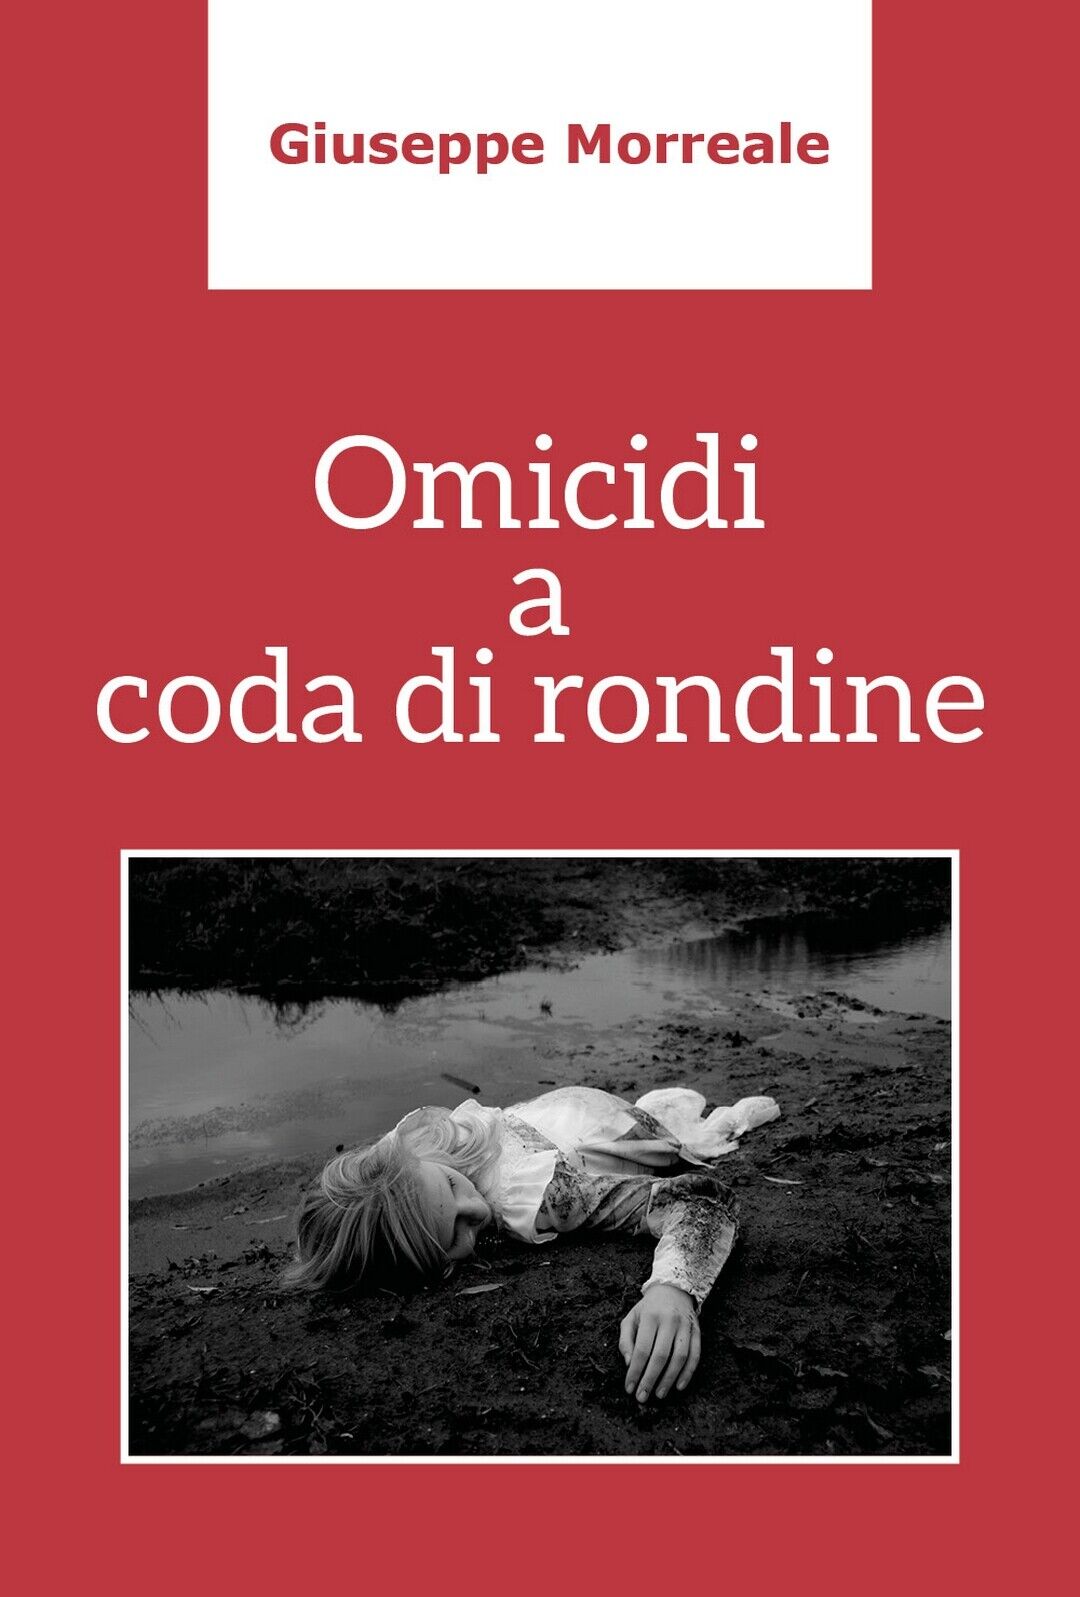 Omicidi a coda di rondine  di Giuseppe Morreale,  2019,  Youcanprint